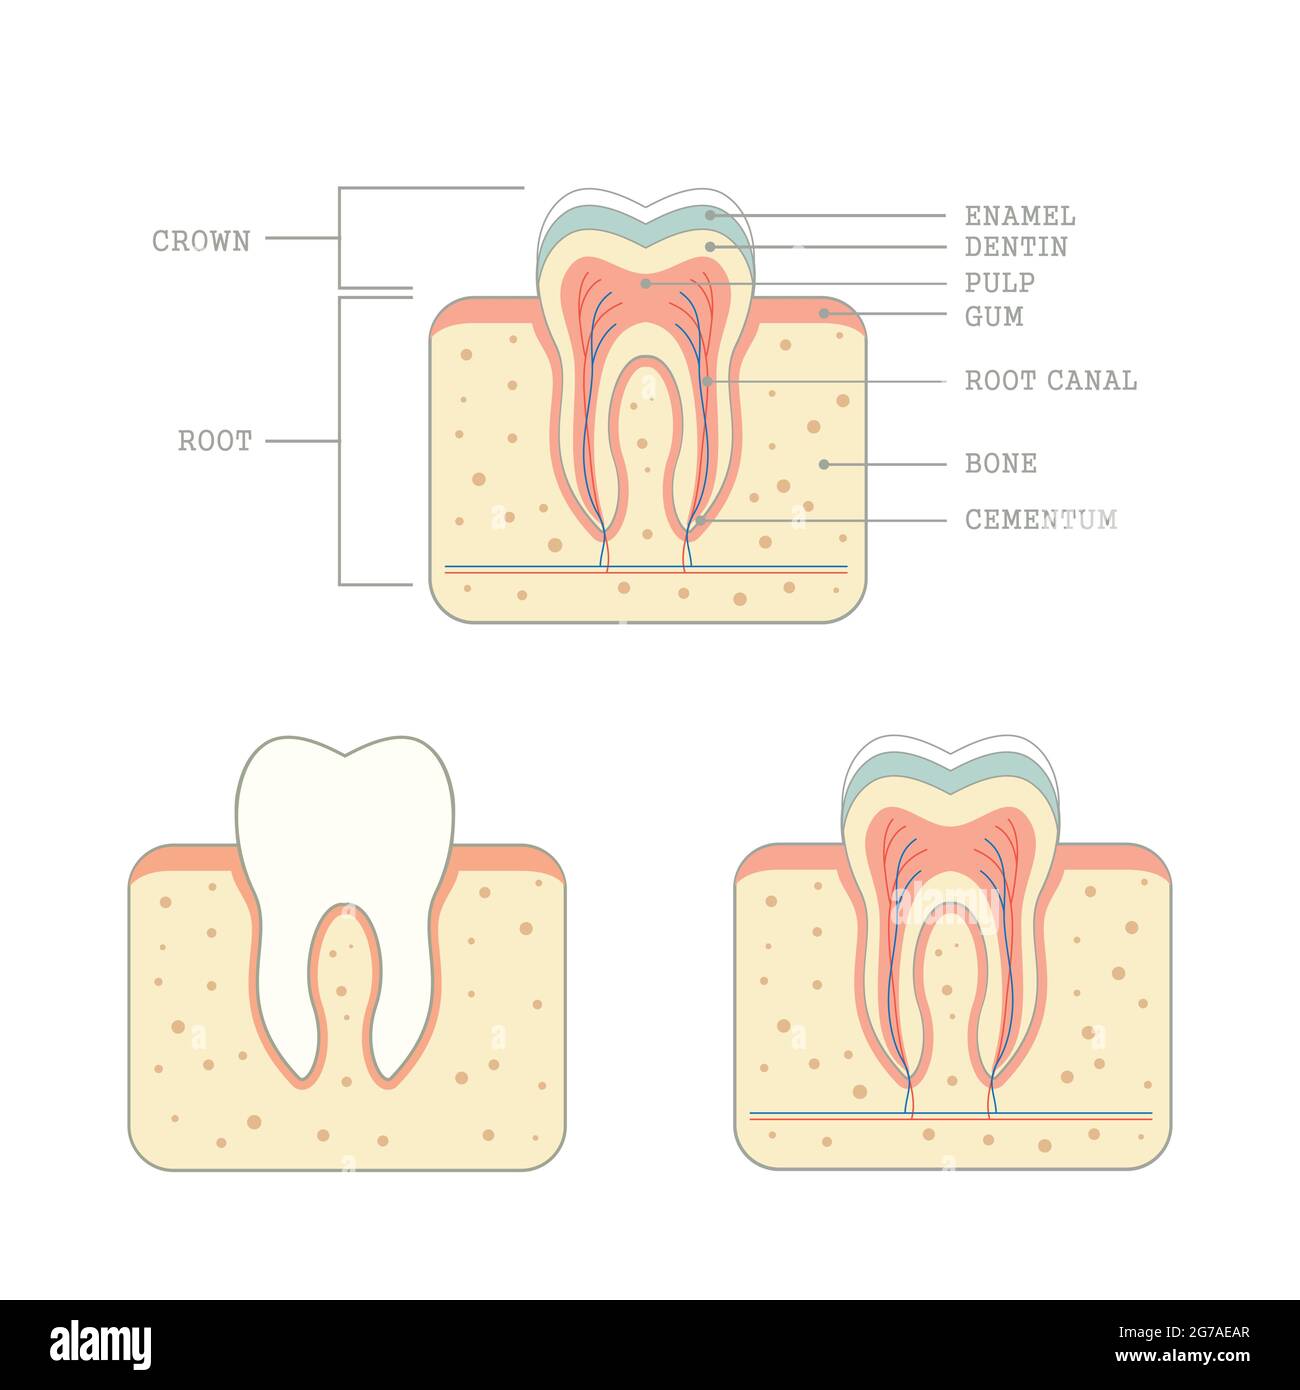 Human Tooth Anatomy Medical Teeth Illustration Stock Vector Image